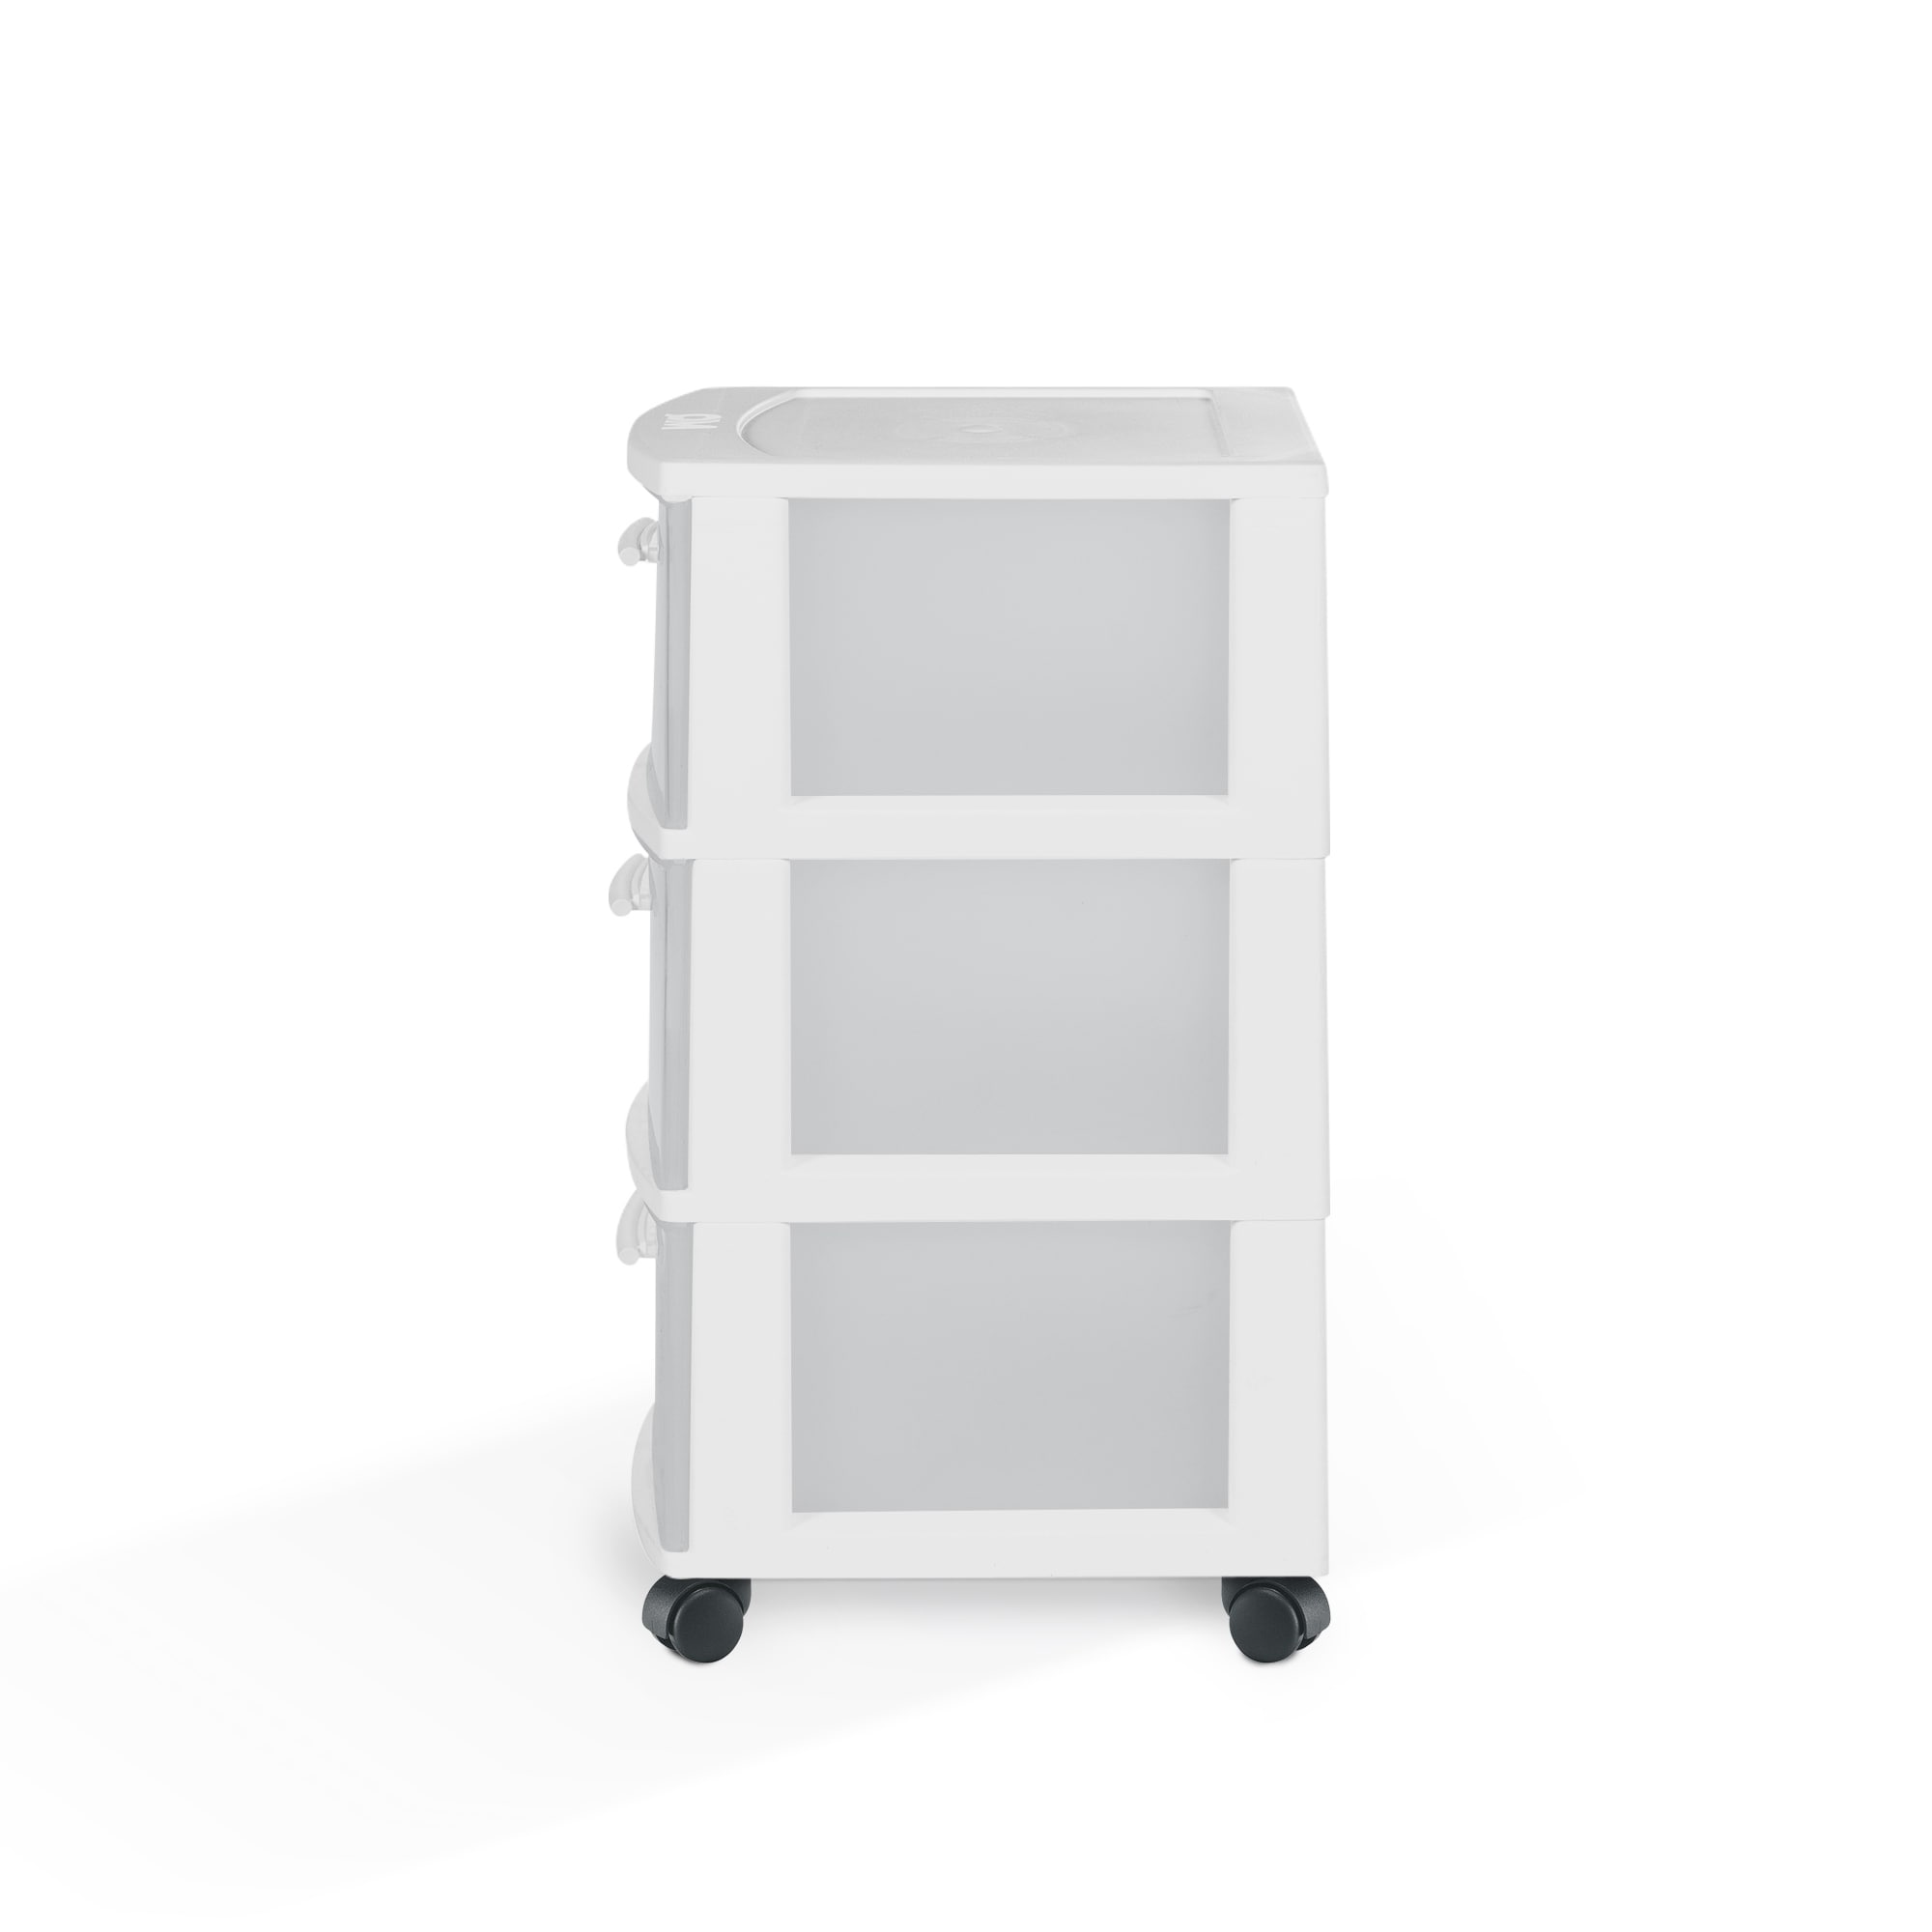 deeltje in verlegenheid gebracht kust MQ 3-Drawer Plastic Rolling Storage Cart with Casters (2 Pack) - On Sale -  Overstock - 32651150